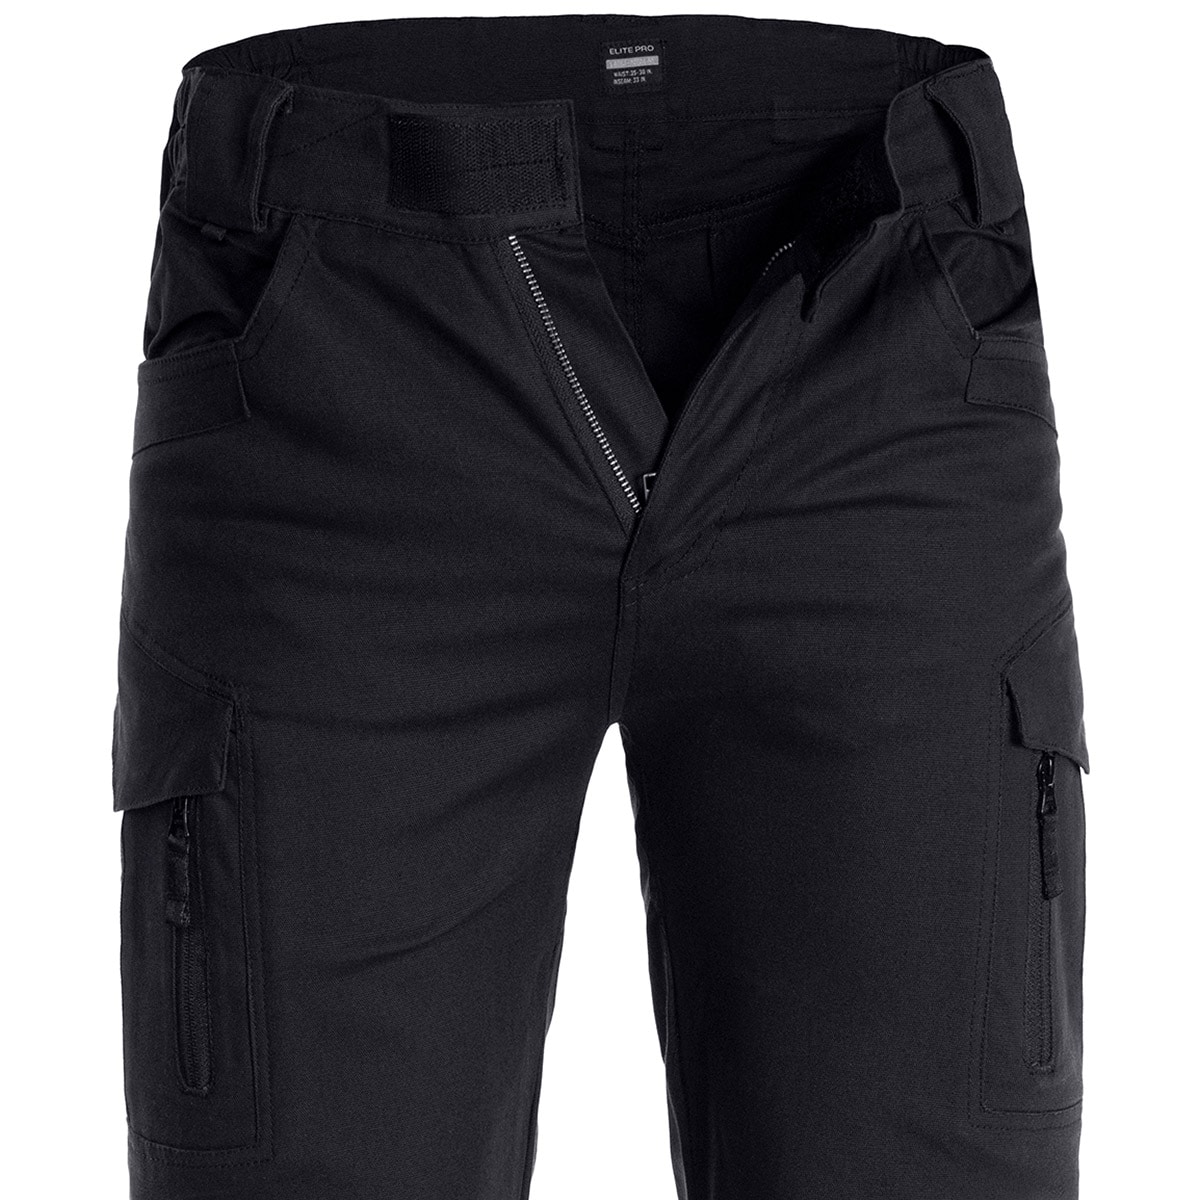 Spodnie Texar Elite Pro 2.0 - Black